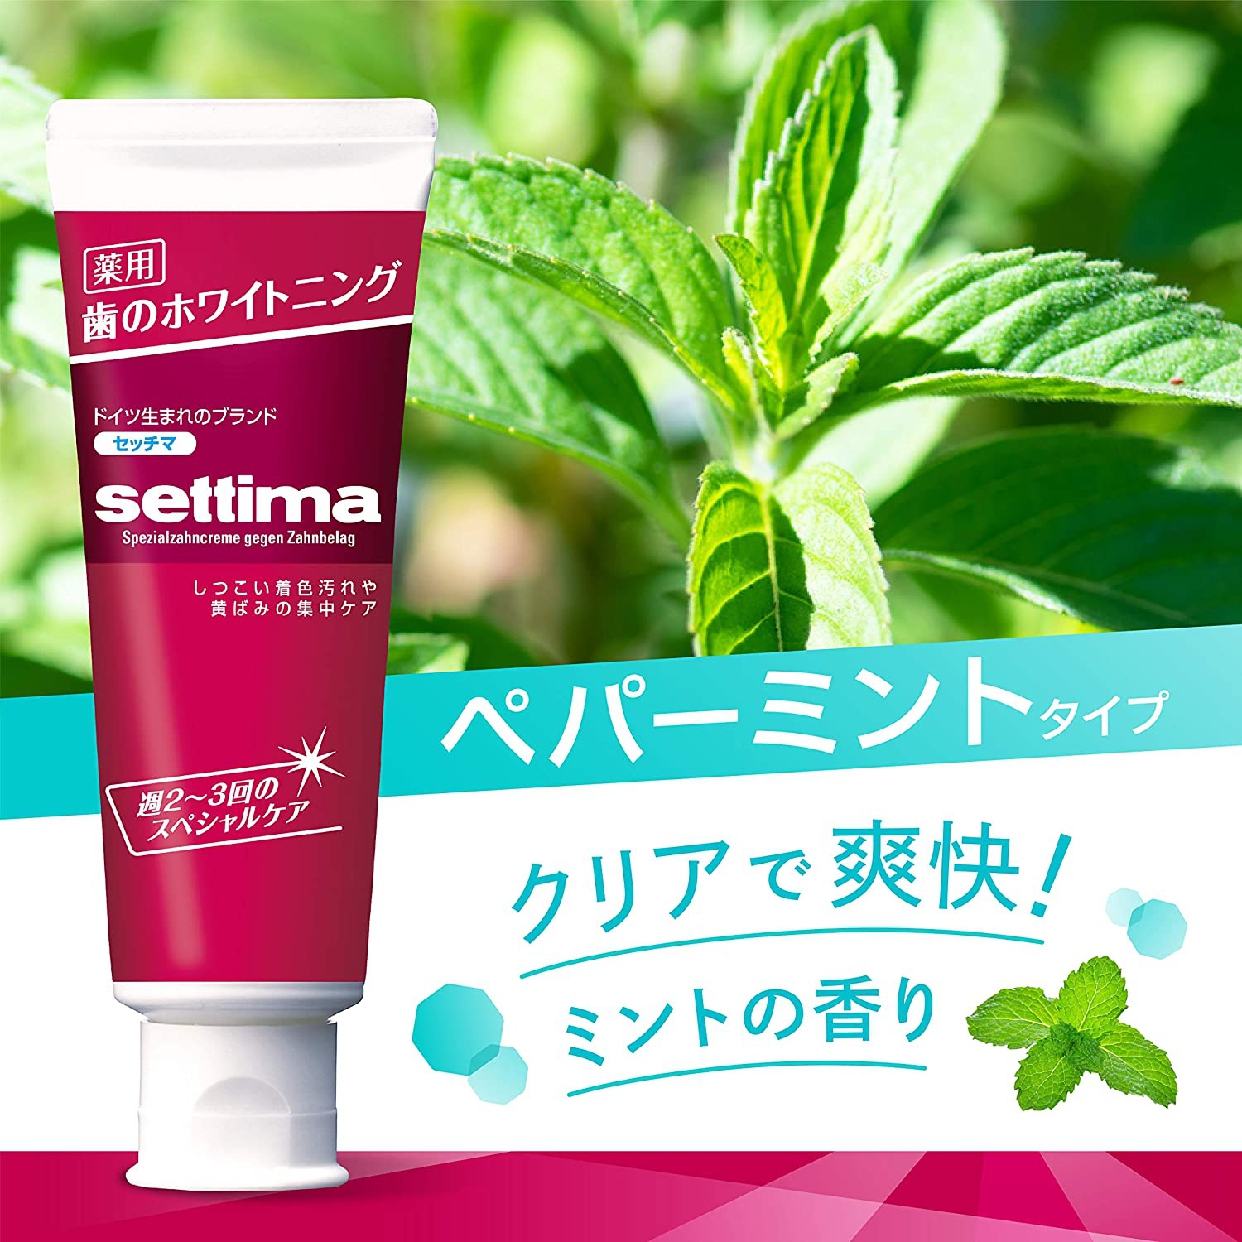 settima(セッチマ) はみがき スペシャルの商品画像10 